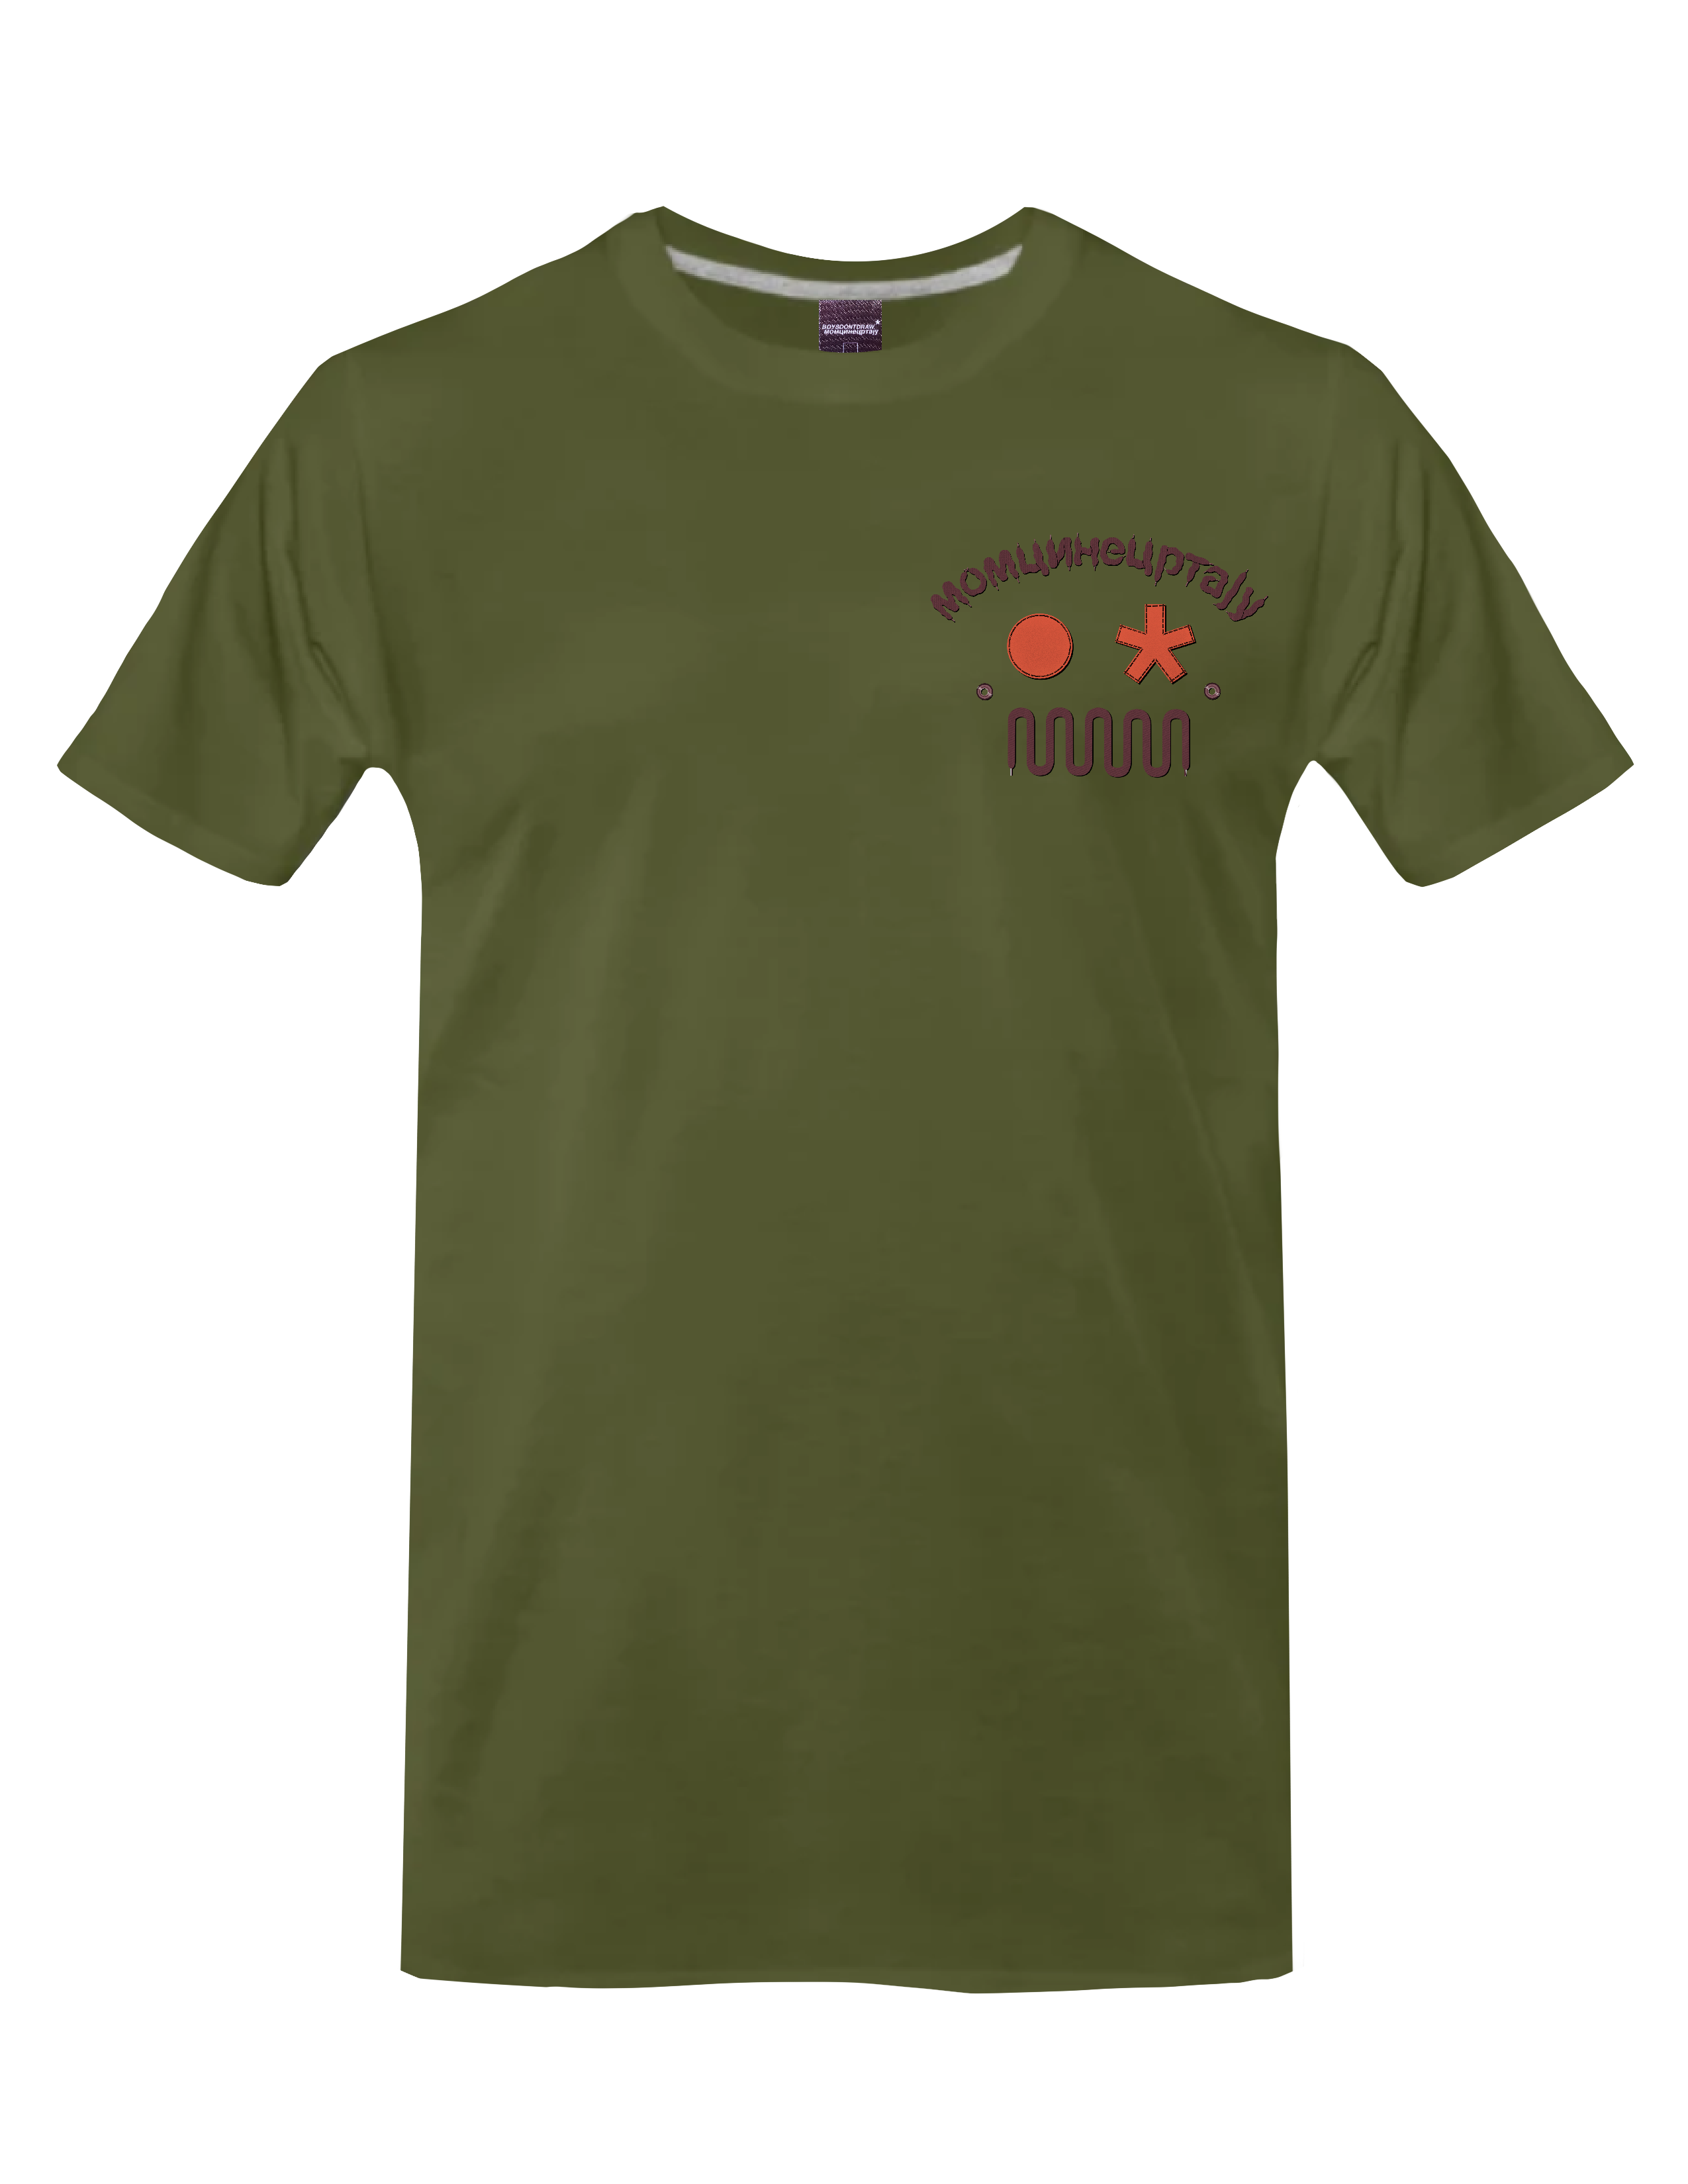 IVY PARK BEYONCÉ (Olive Green) - T-Shirt by BOYSDONTDRAW